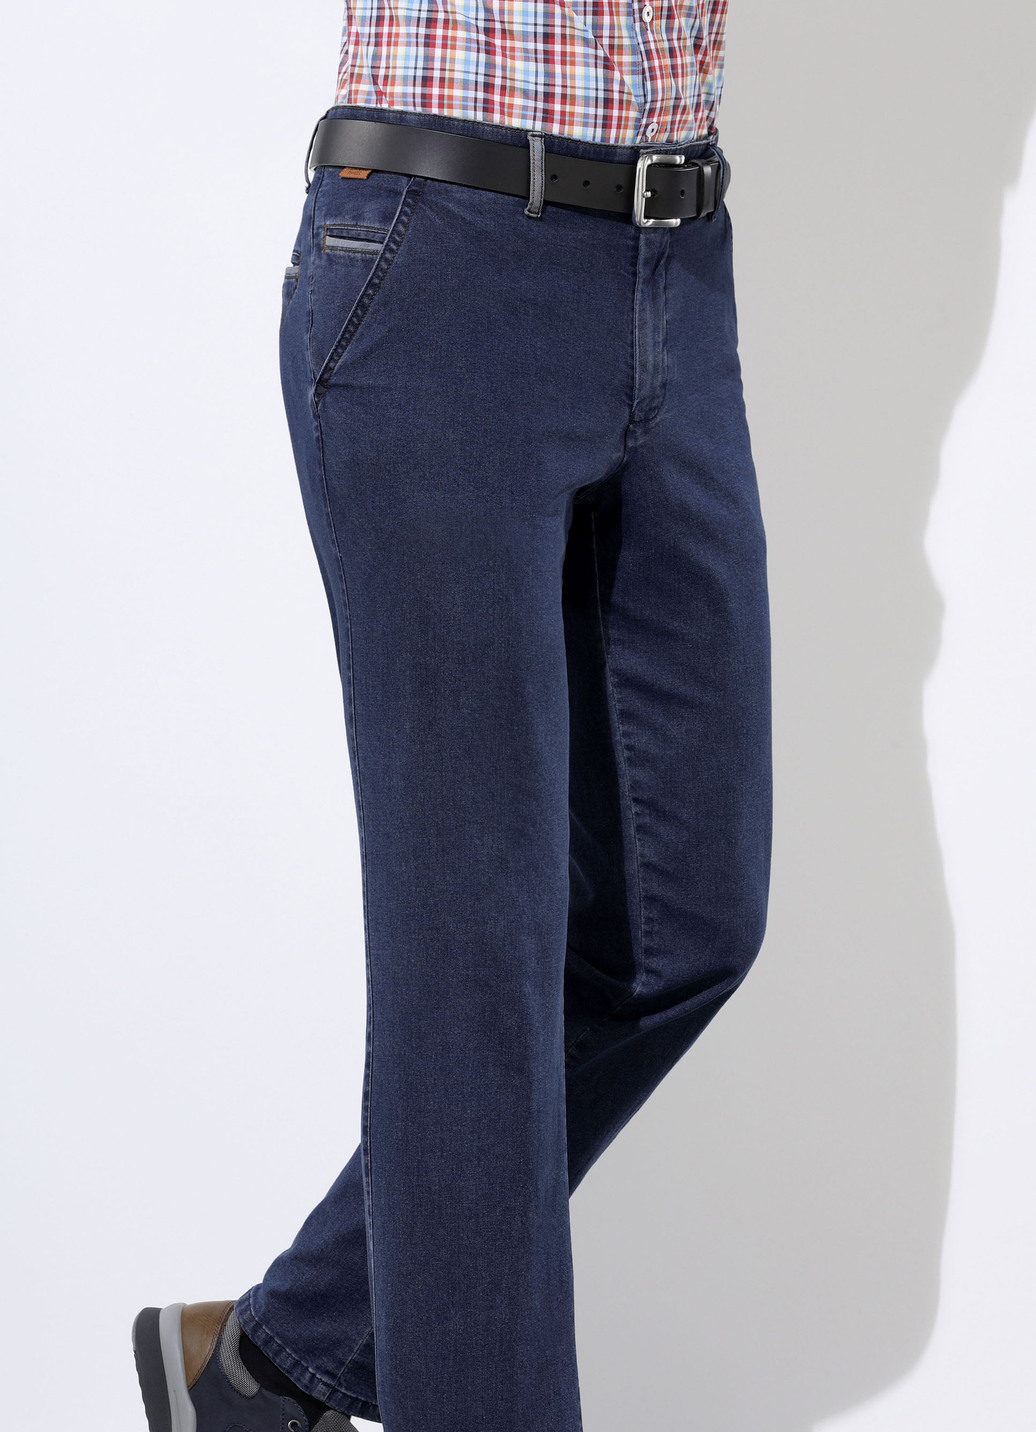 "Francesco Botti"-Jeans in 3 Farben, Dunkelblau, Größe 62 von FRANCESCO BOTTI